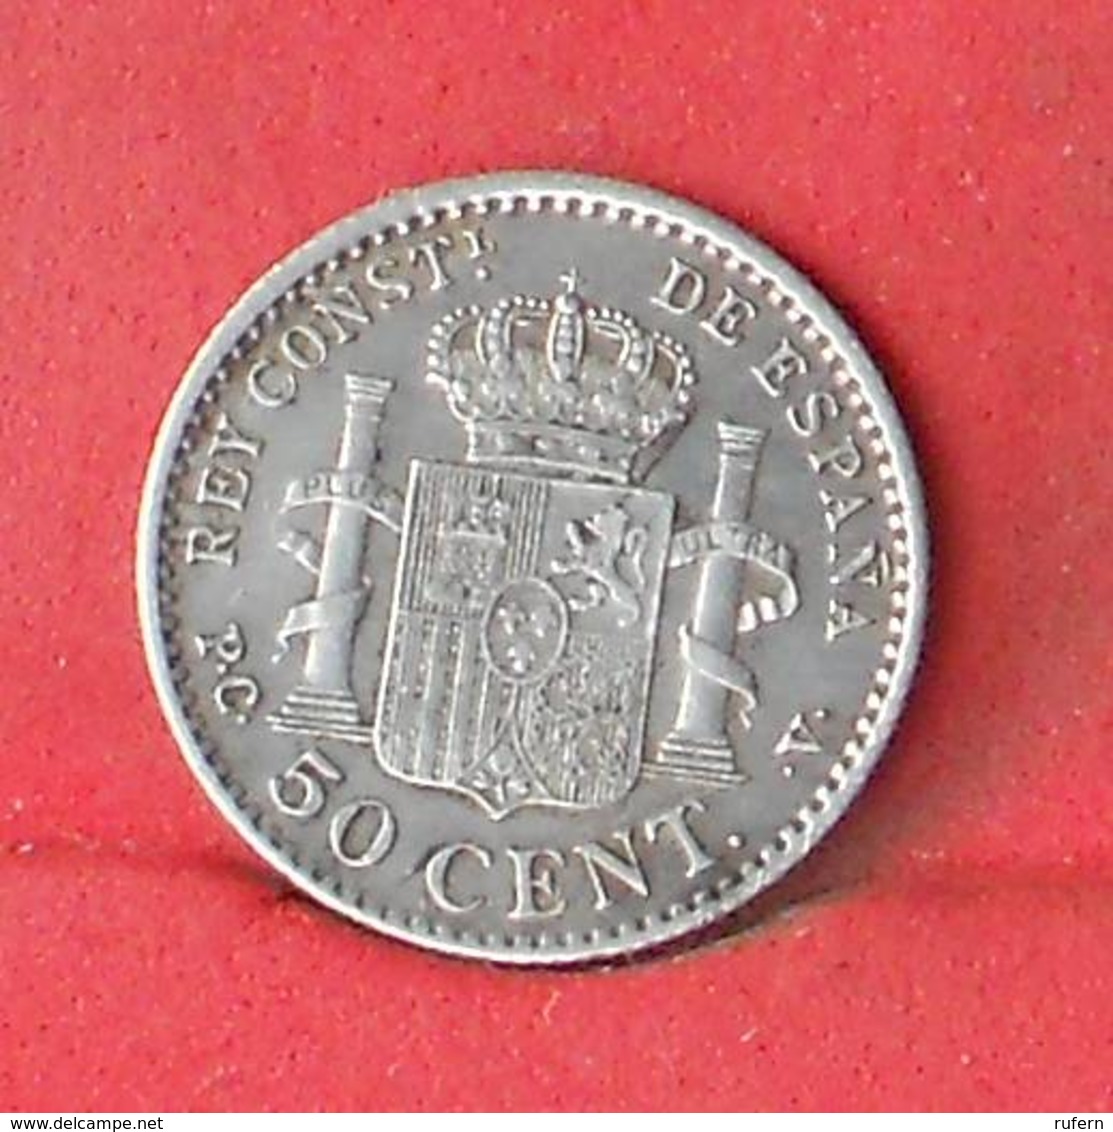 SPAIN 50 CENT  1904 - PC.V. - 2,5 GRS - 0,835 SILVER   KM# 723 - (Nº26915) - First Minting